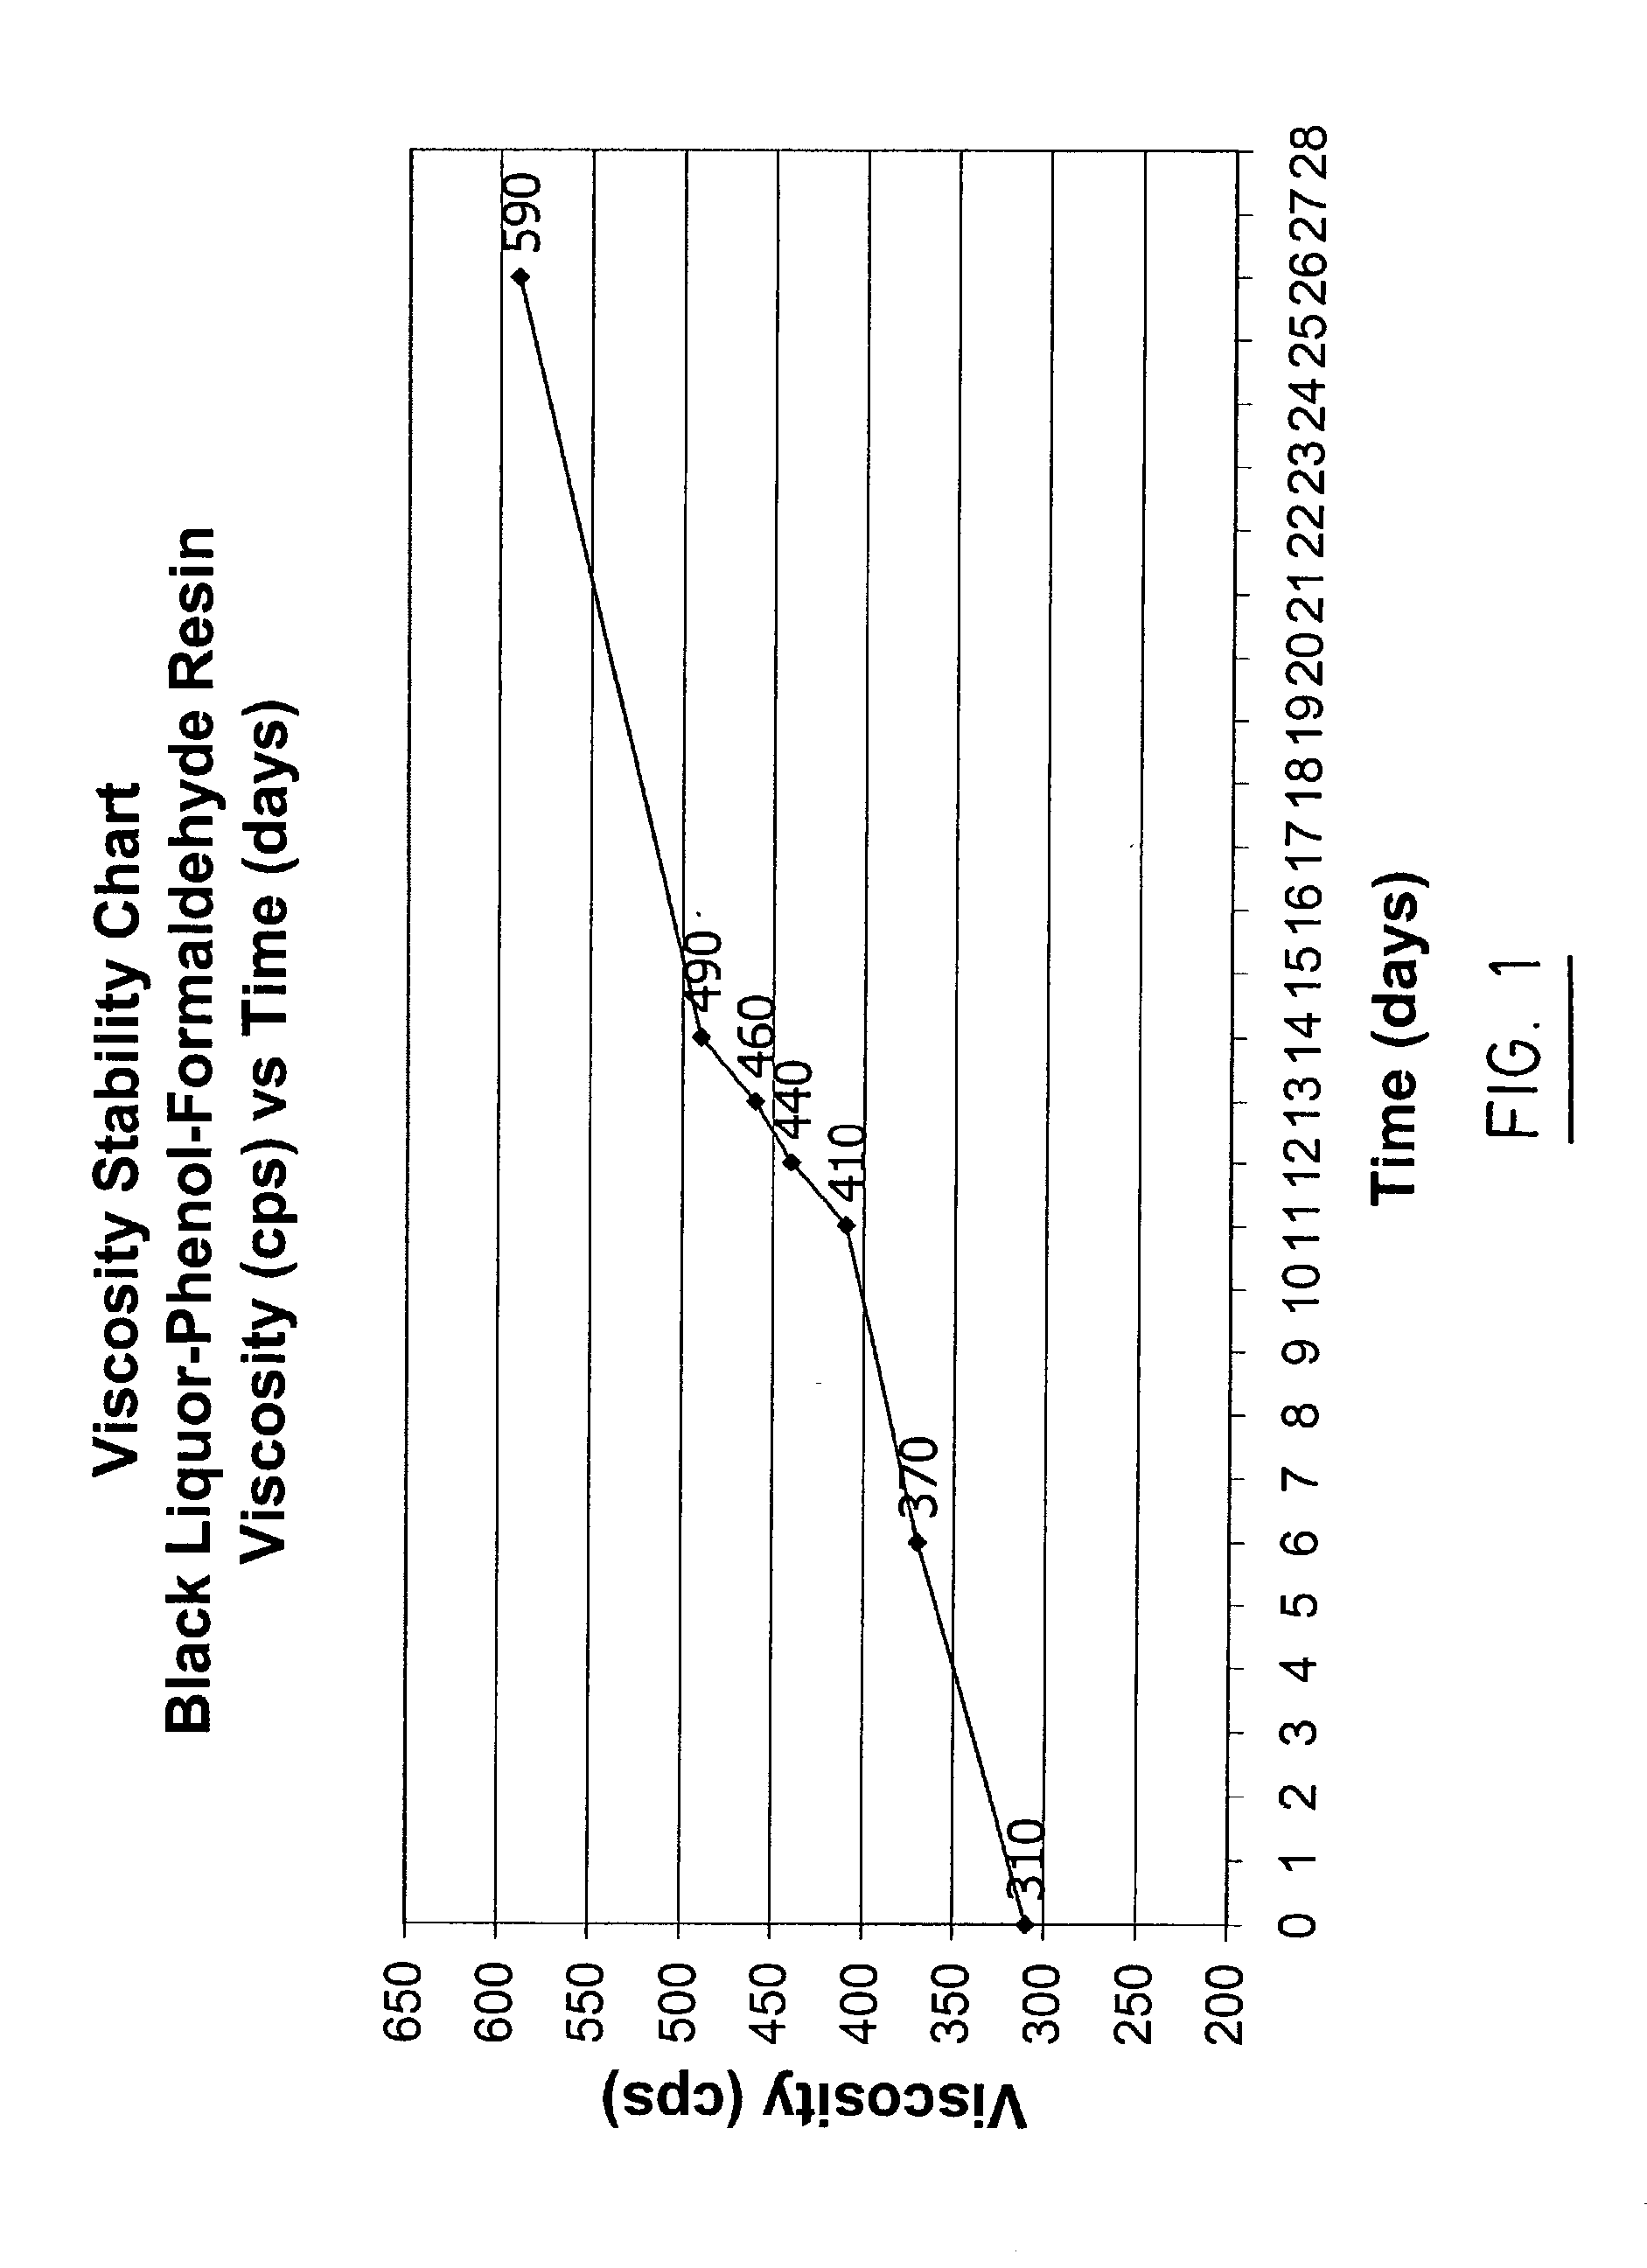 Process for preparing a black liquor-phenol formaldehyde thermoset resin